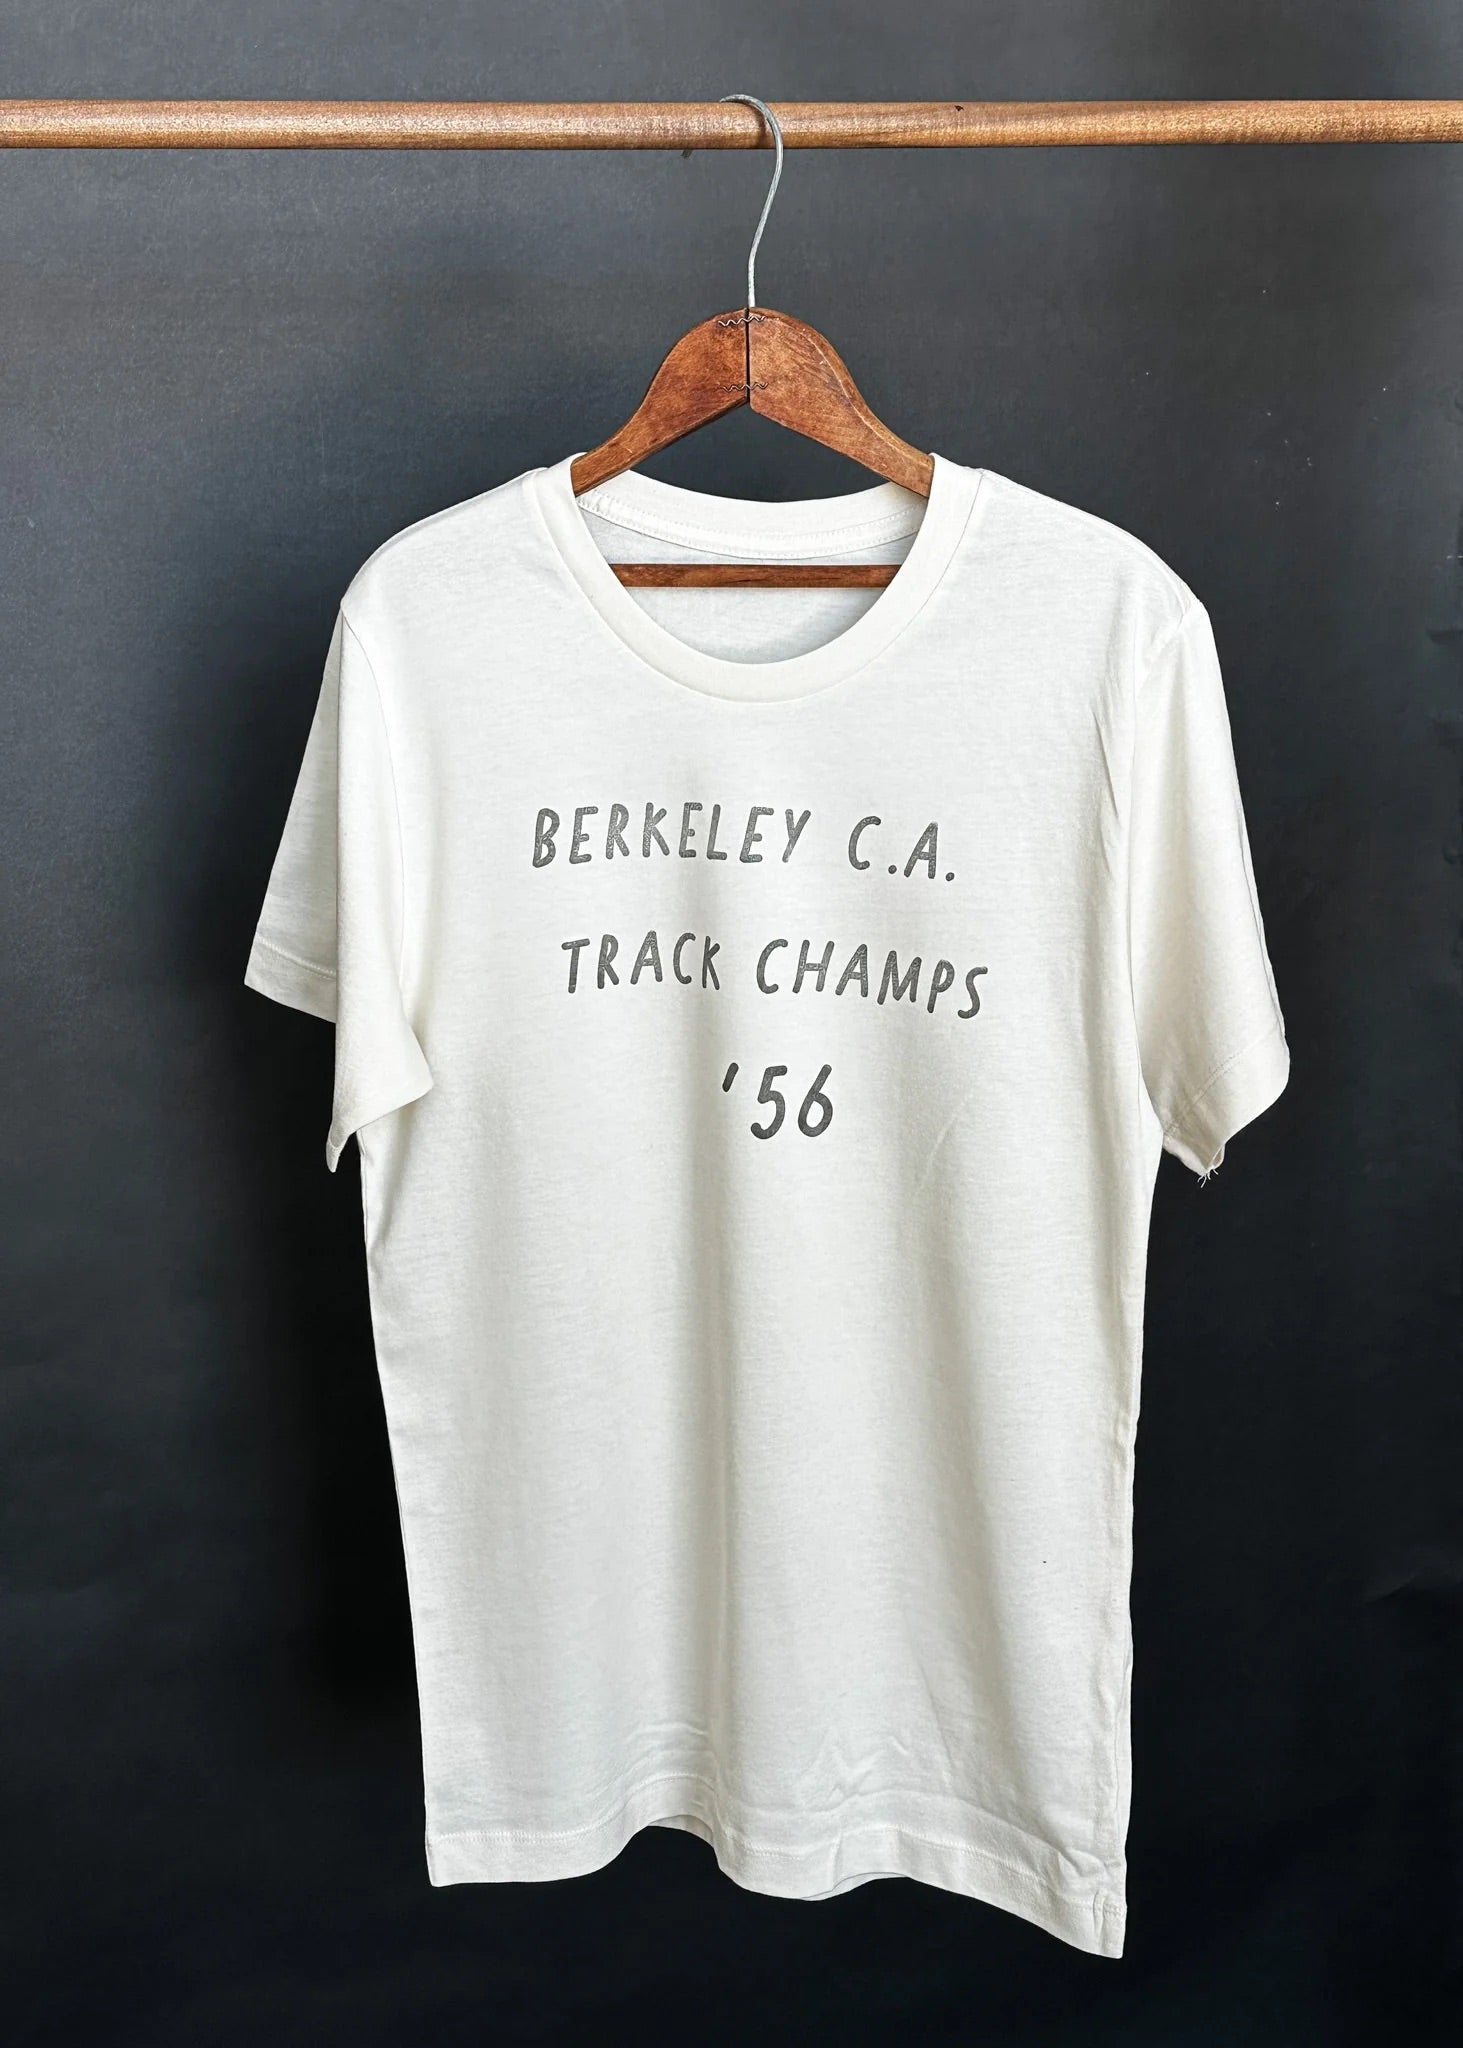 BERKELEY C.A. TRACK CHAMPS '56